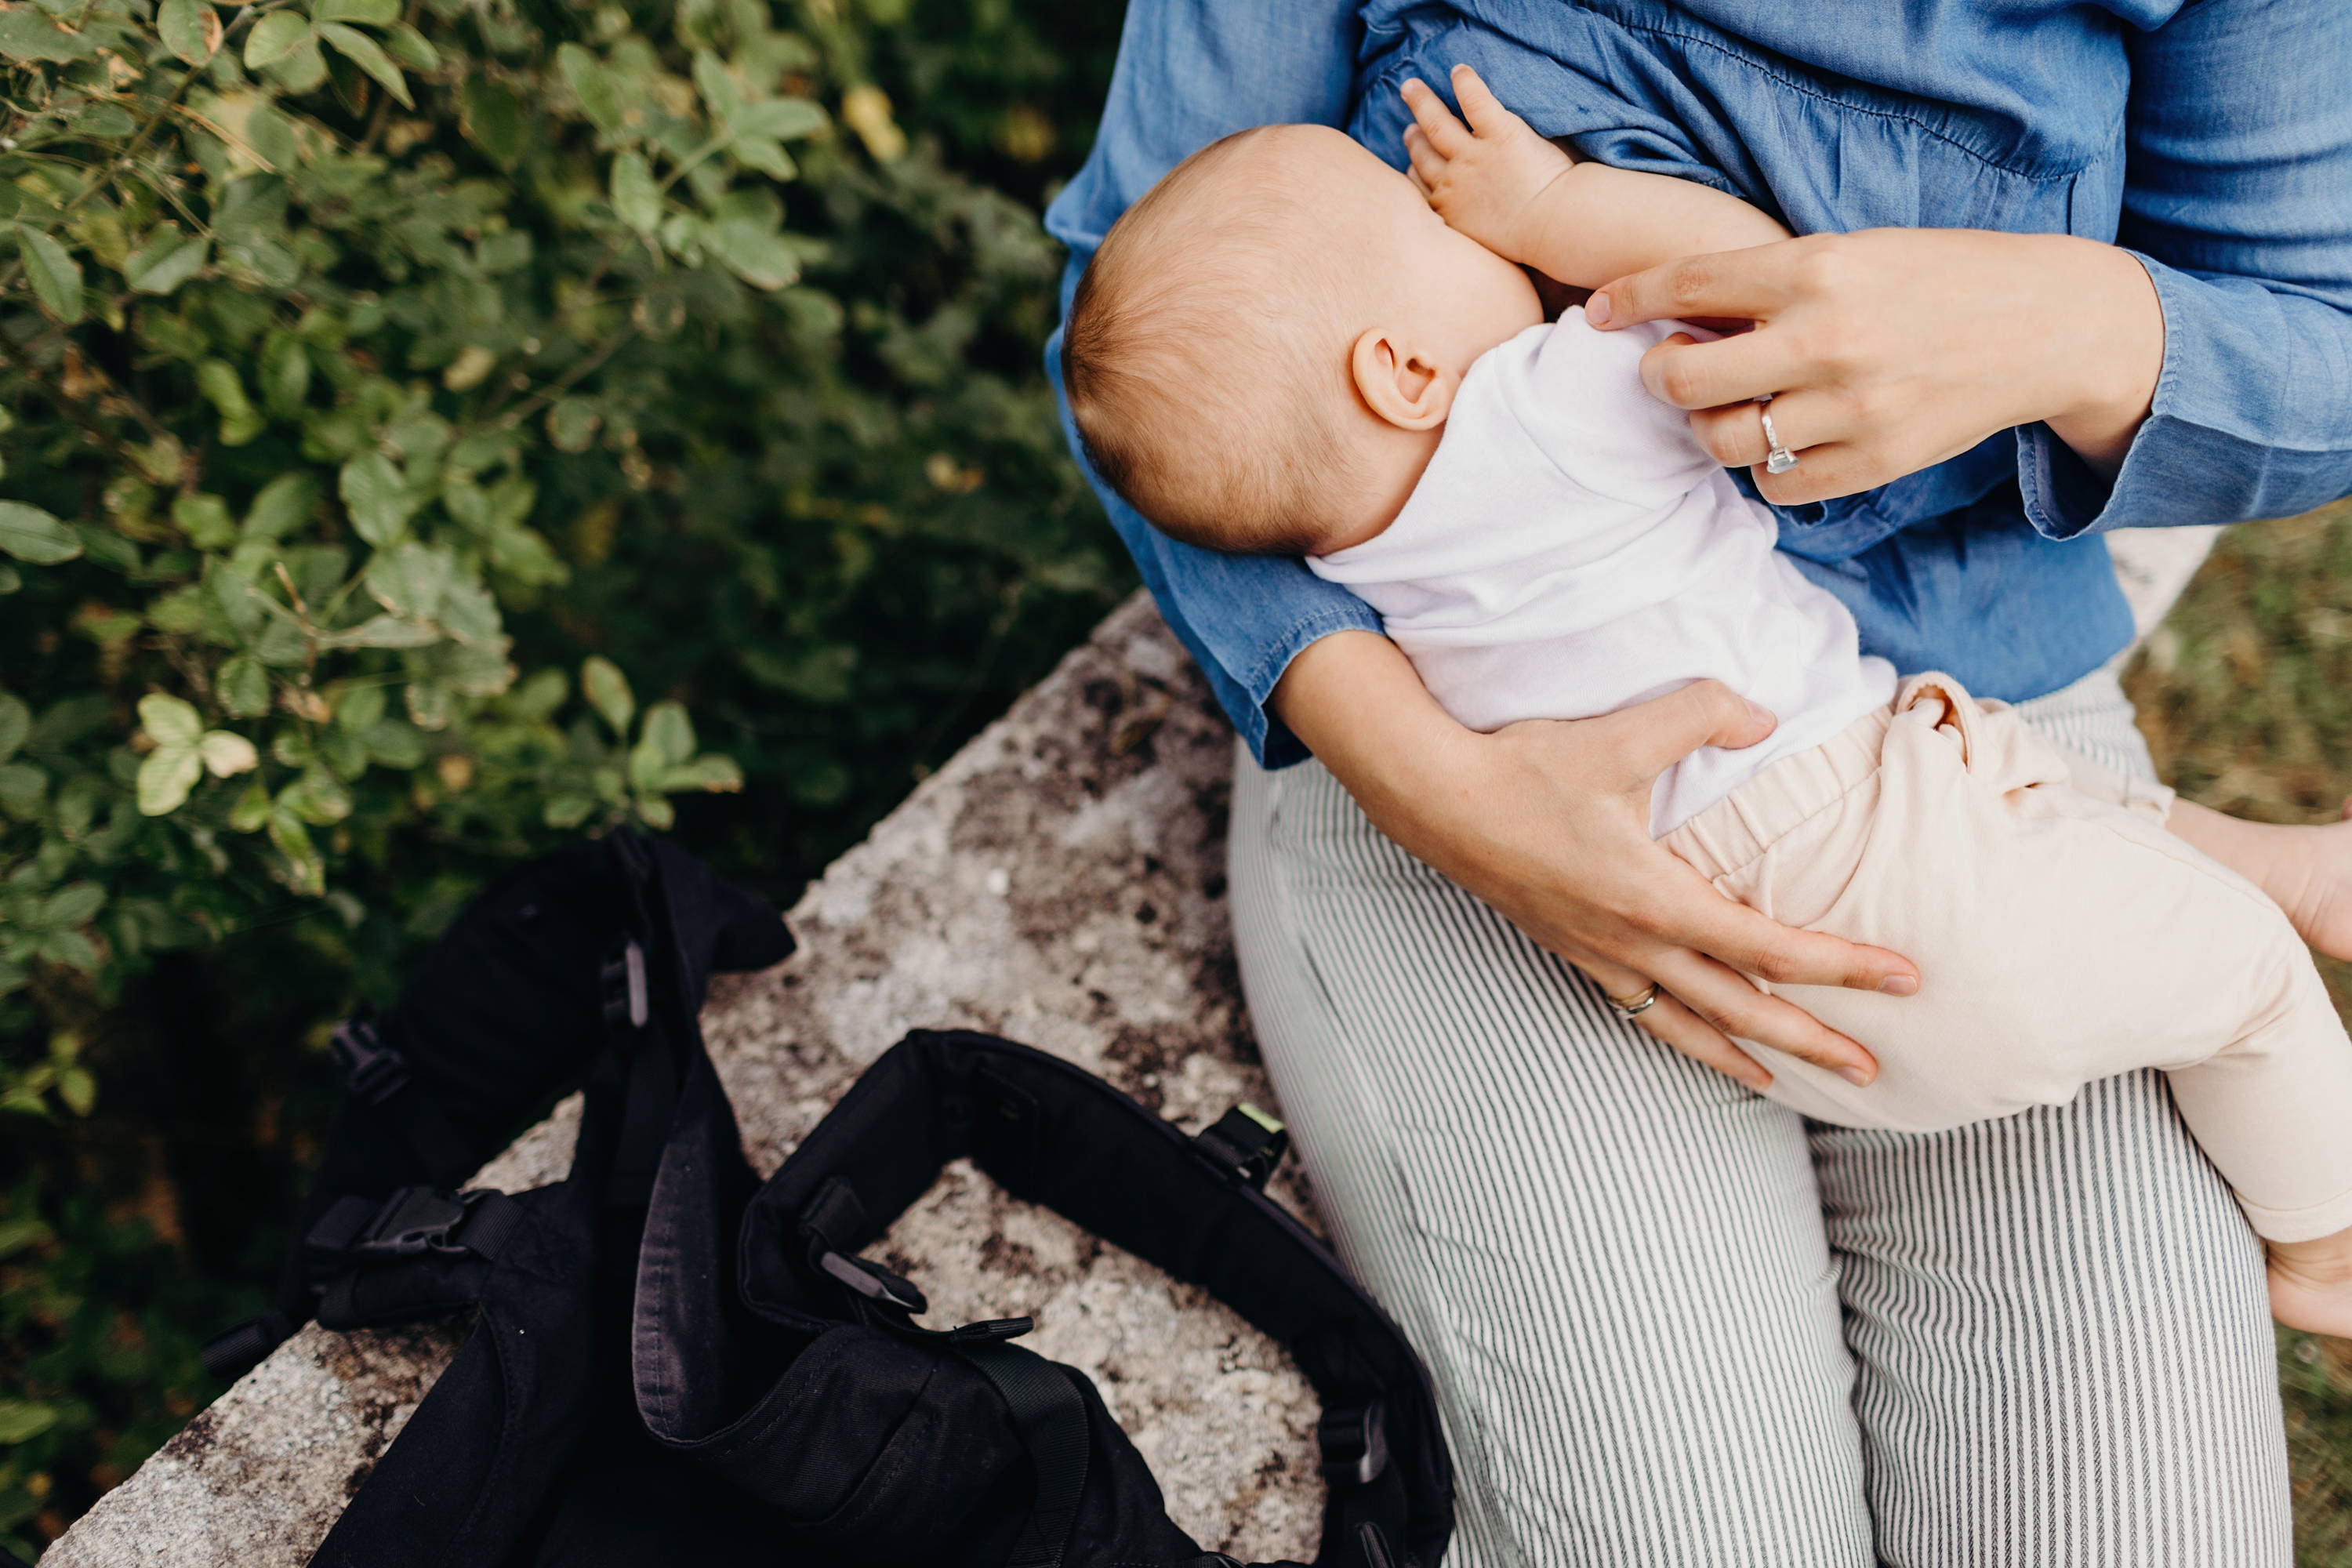 Sleepy baby breastfeeding with mom wearing a denim shirt